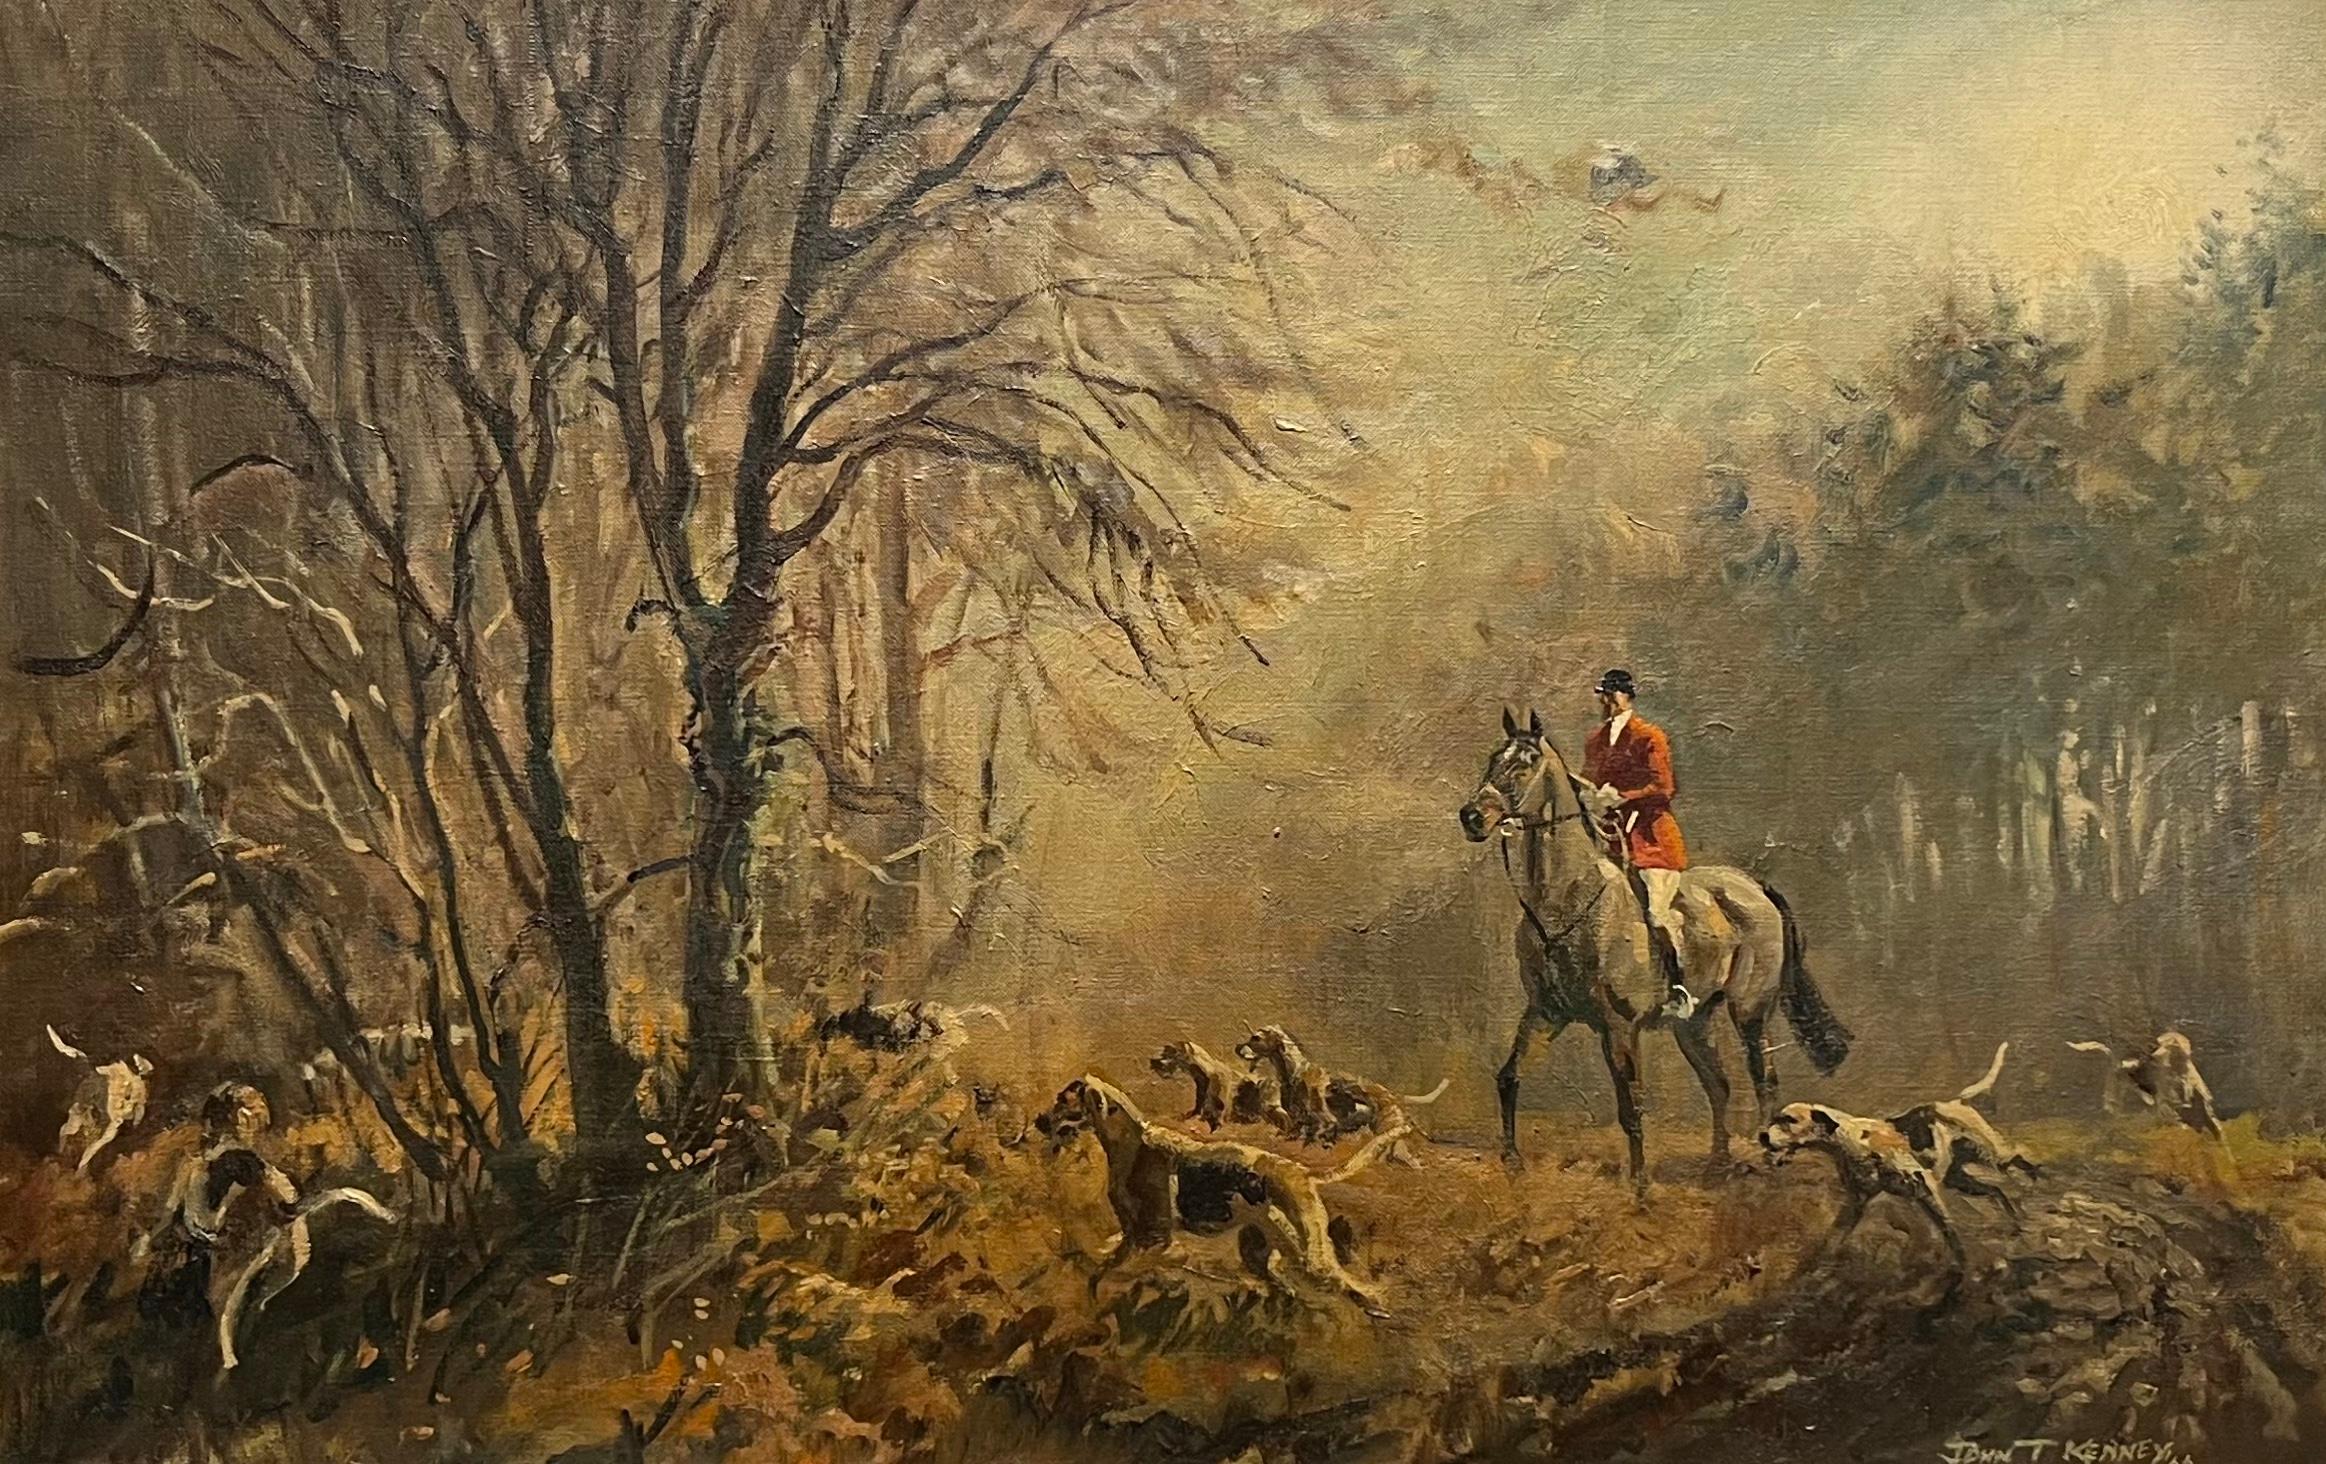 The Fernie Cub hunting - Painting by John Theodore Eardley Kenney